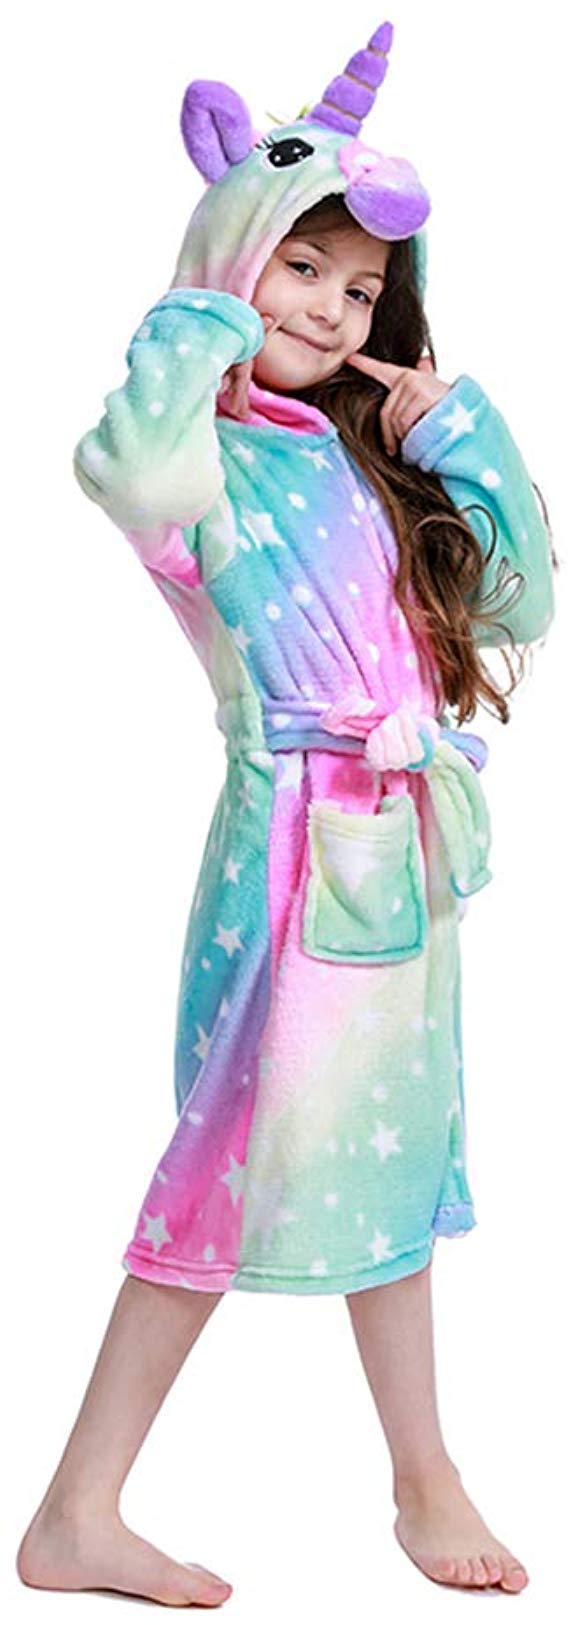 2019 Newest Unicorn Bathrobe for Girls,Premium Flannel Hooded Robe-Unicorn Gifts